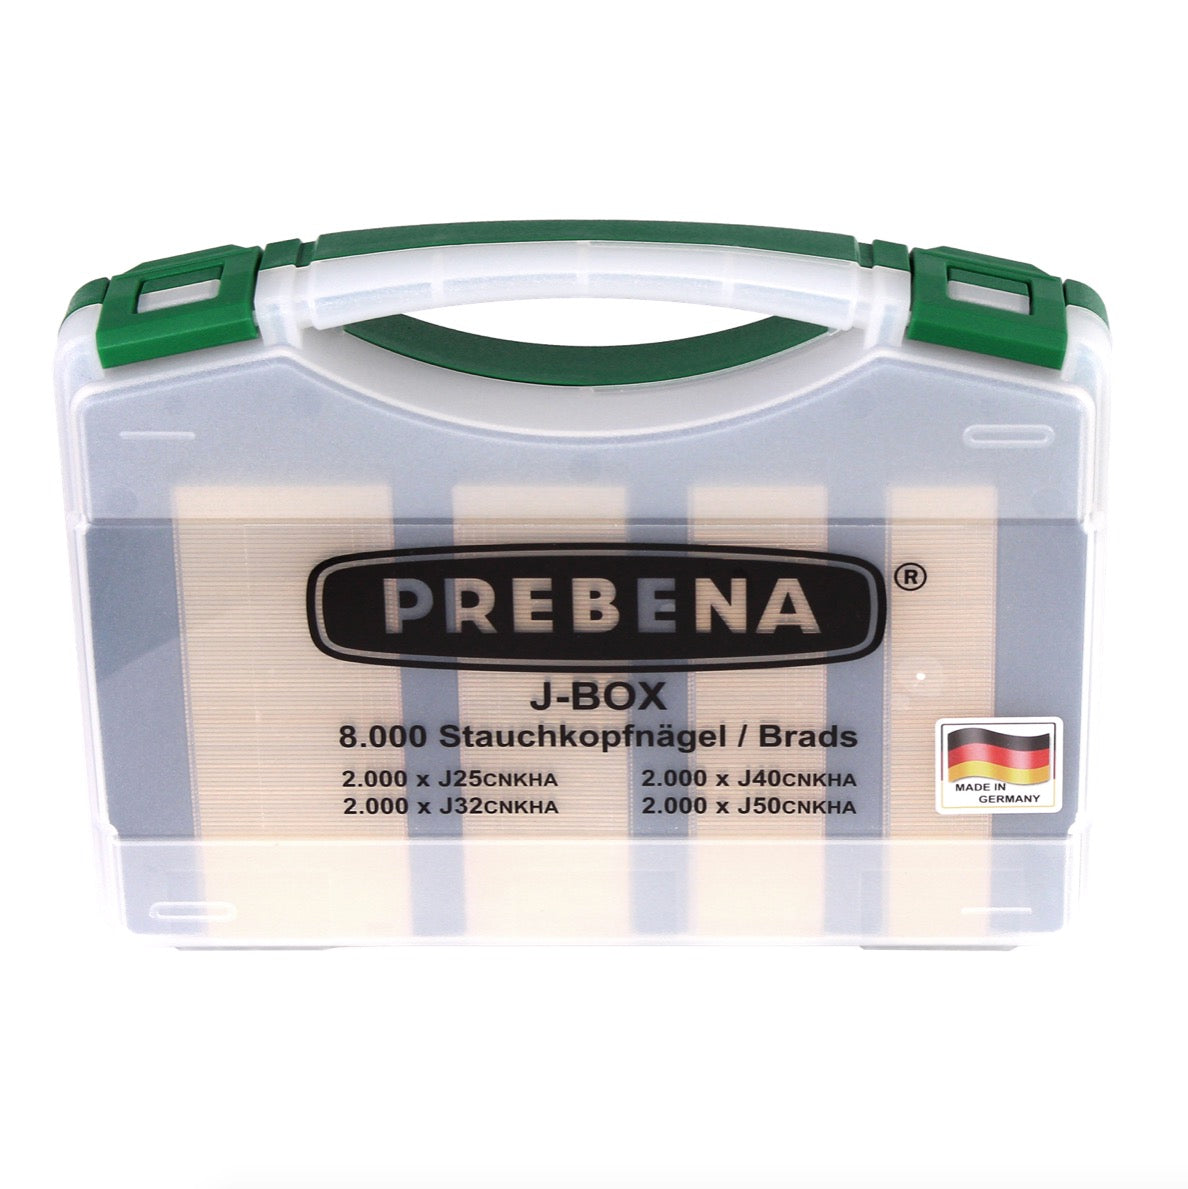 Prebena 2XR-J50 Luftdruck Druckluftnagler im Transportkoffer + J-BOX 8.000 Stauchkopfnägel / Brads - Toolbrothers